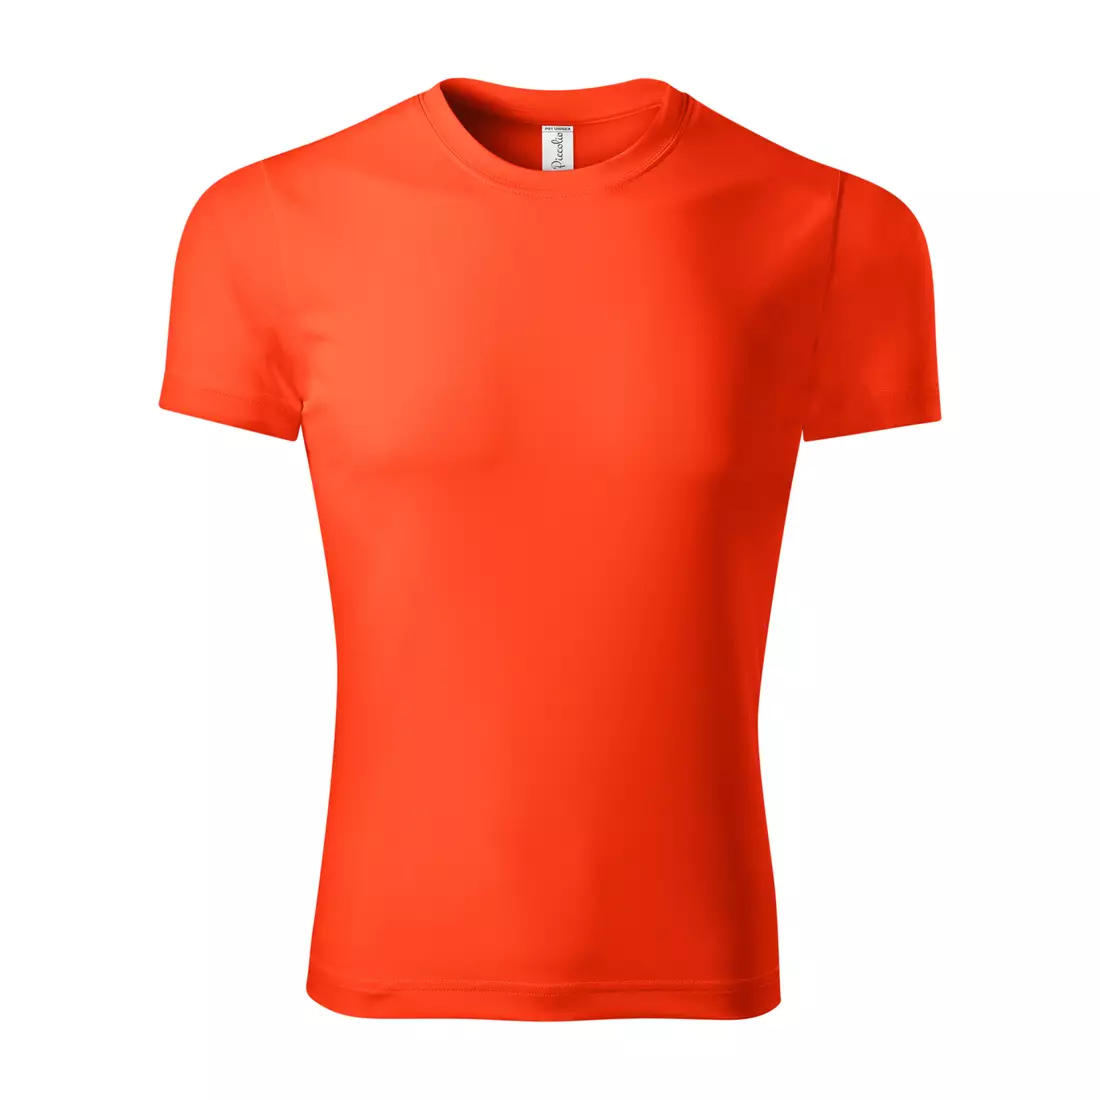 PICCOLIO PIXEL Športové tričko T-shirt, krátky rukáv, pre mužov, neonová oranžová, 100 % polyester P819112